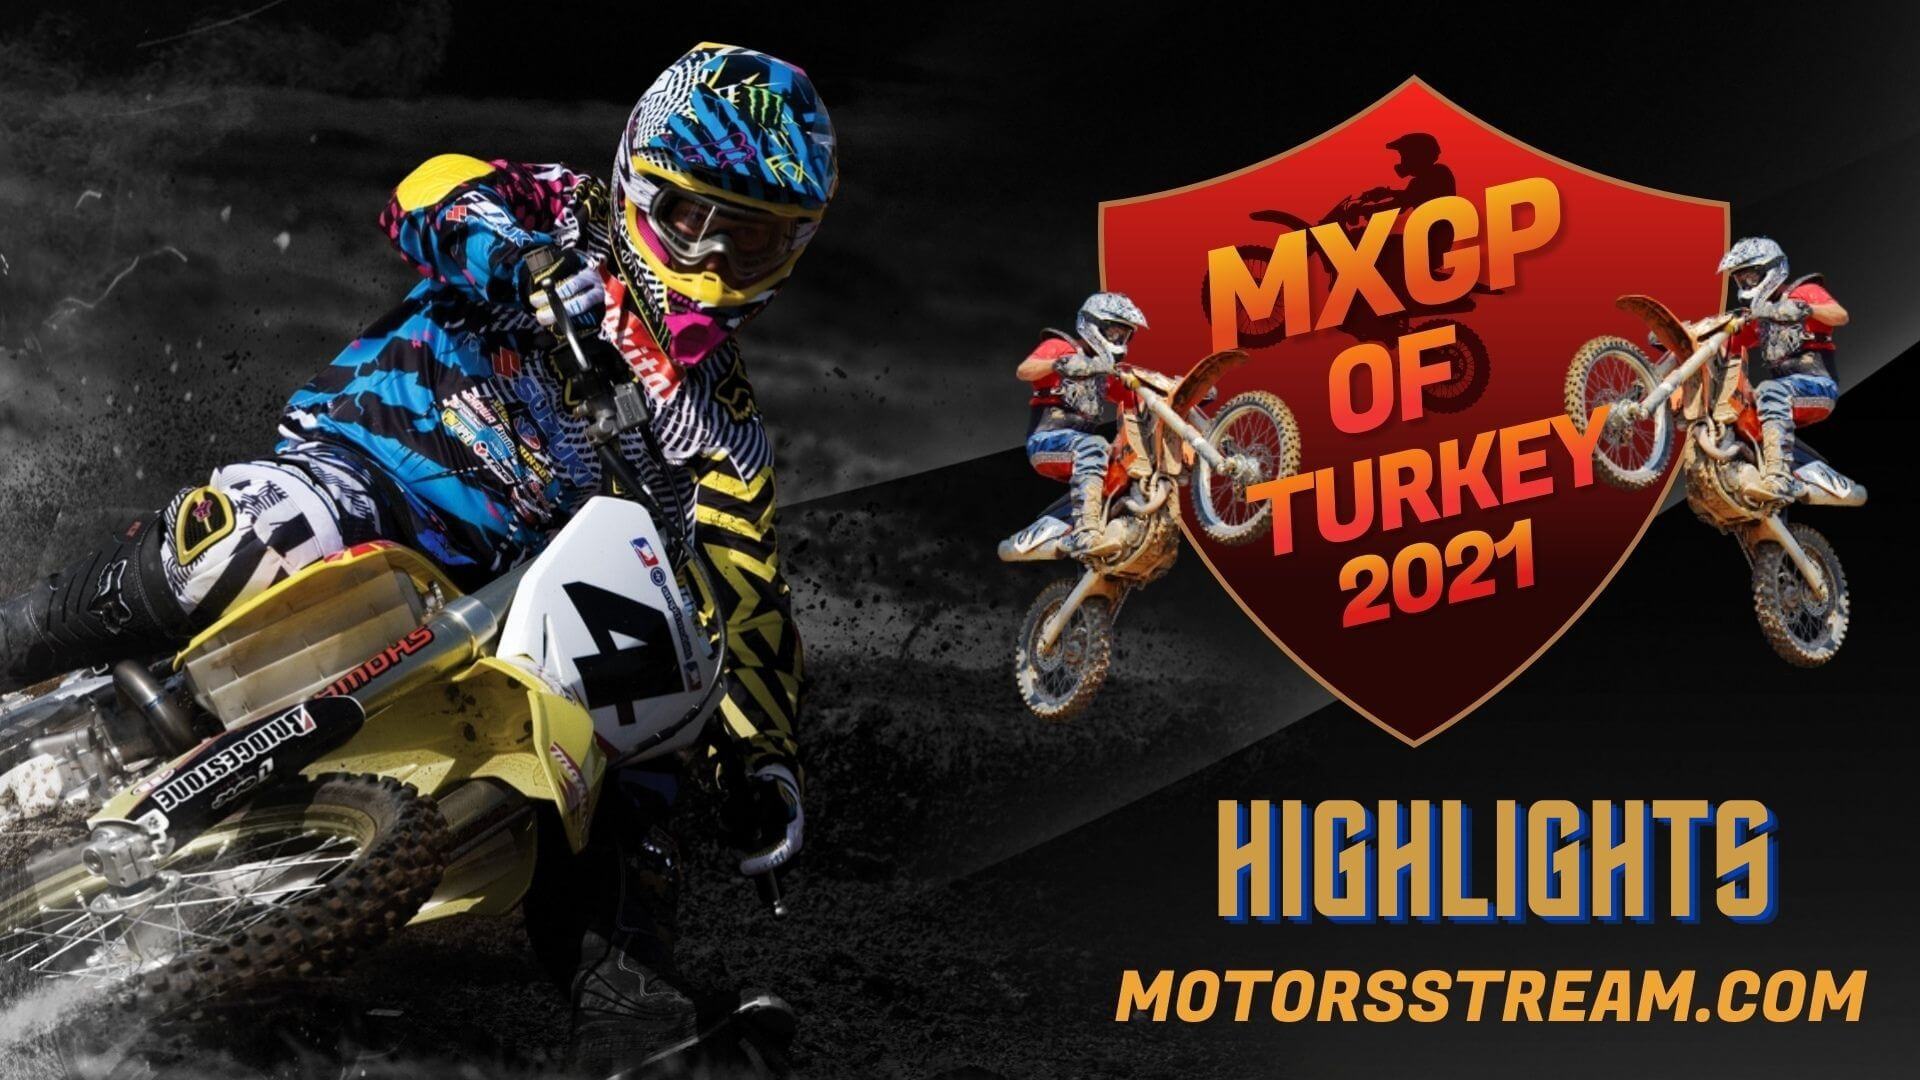 FIM Motocross Turkey Highlight 2021 MXGP